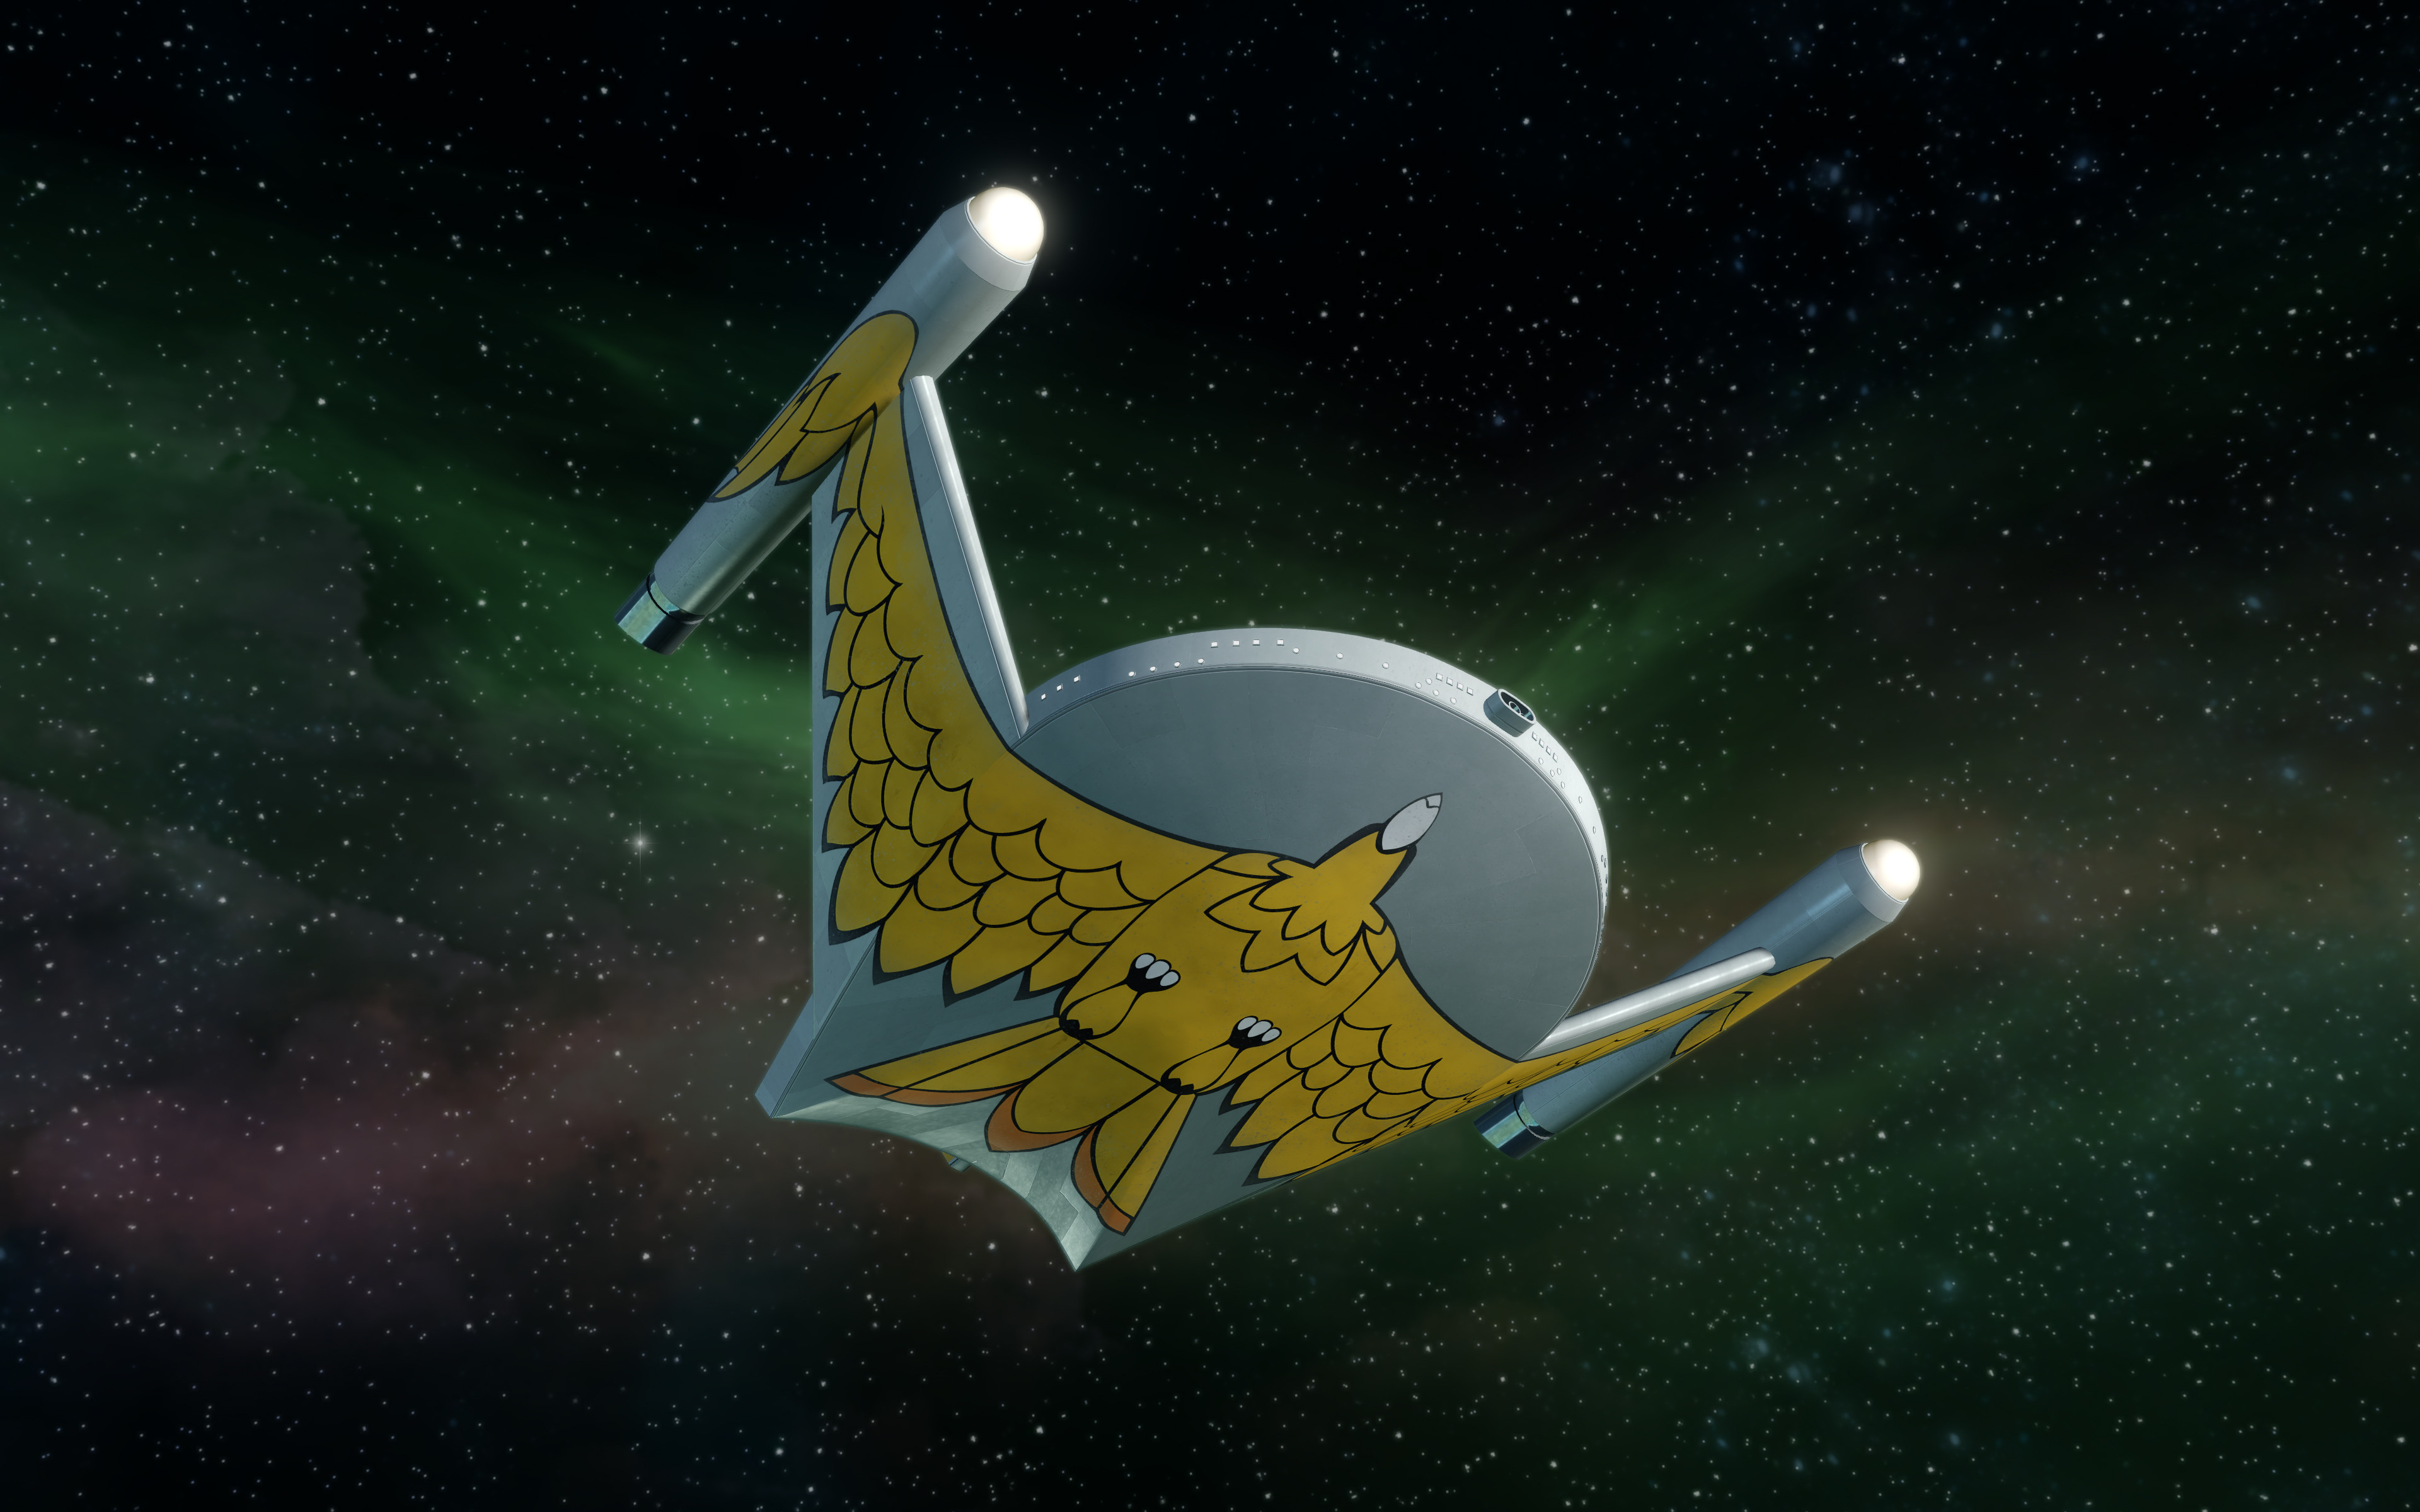 Star Trek Online in-game screenshot.